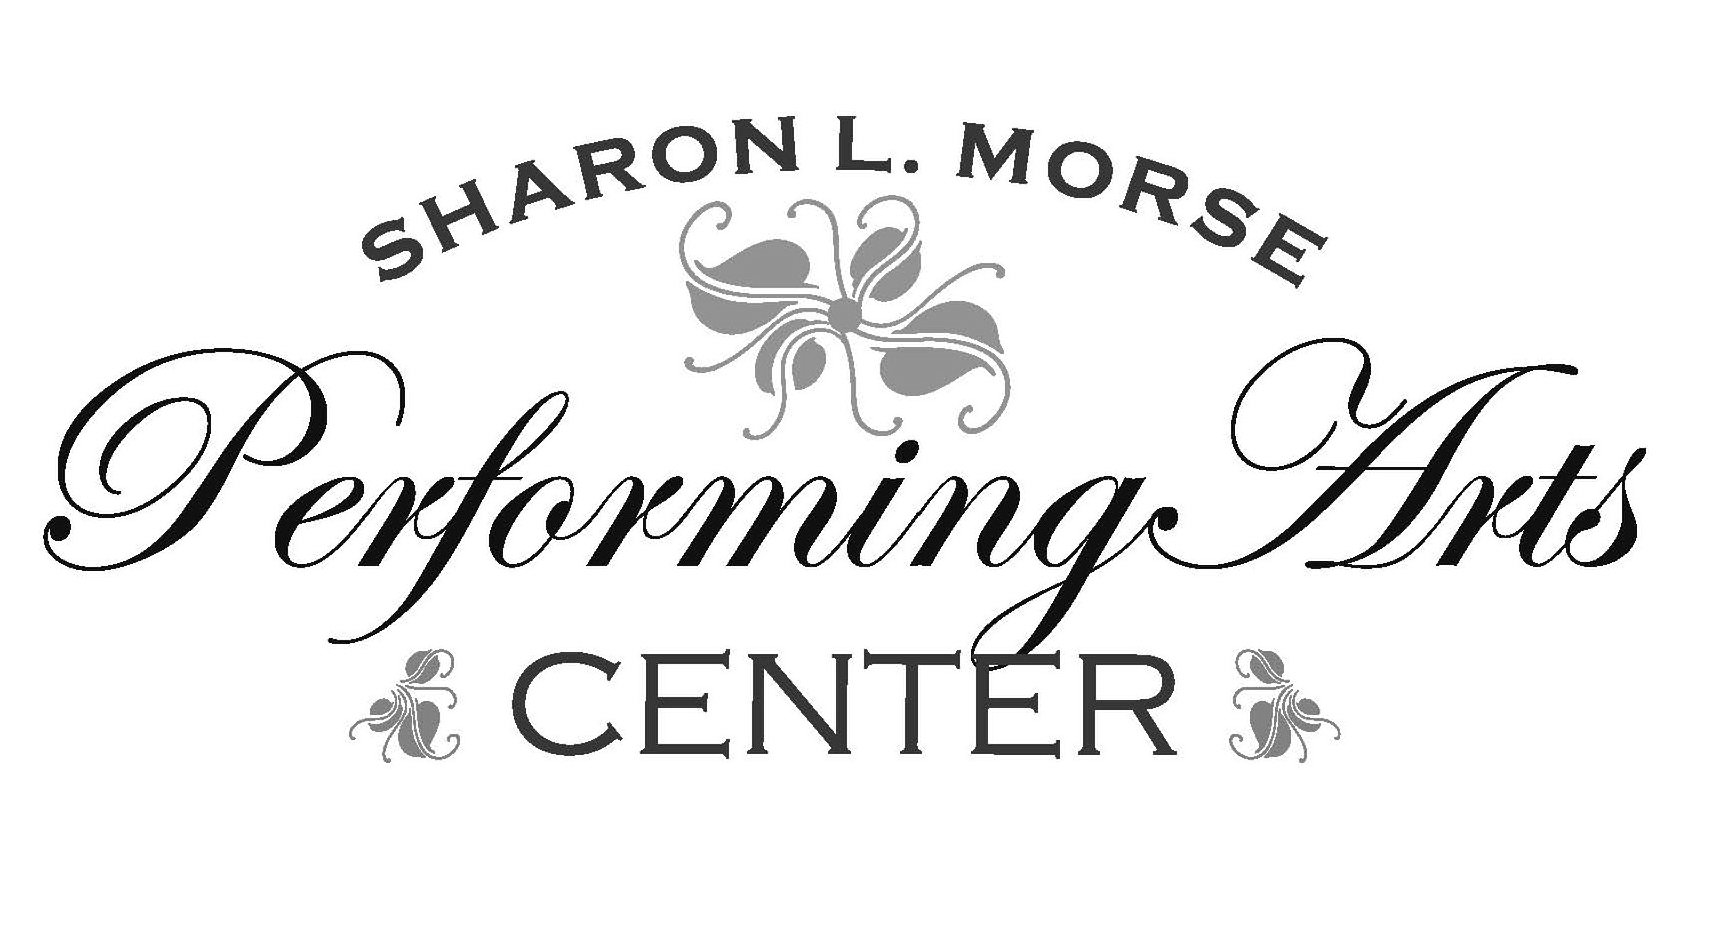  SHARON L. MORSE PERFORMING ARTS CENTER